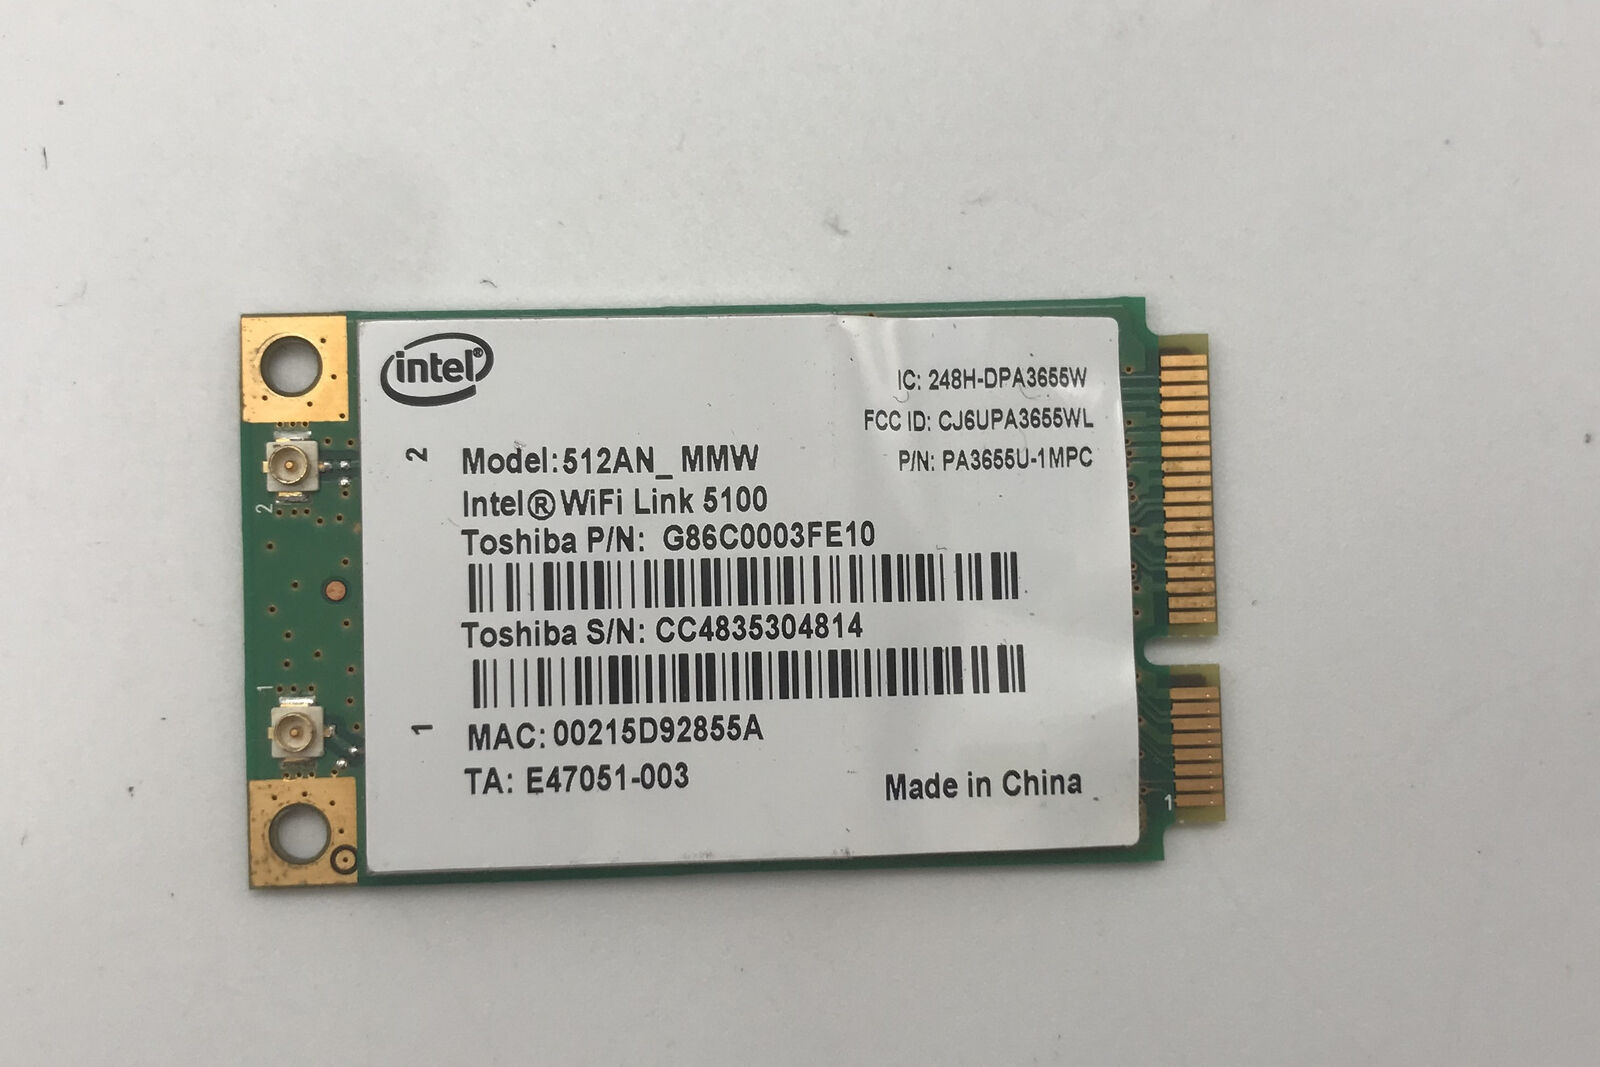 OEM Intel WiFi Link 5100 Model 512AN_MMW for Toshiba Satellite PRO S300-S2503